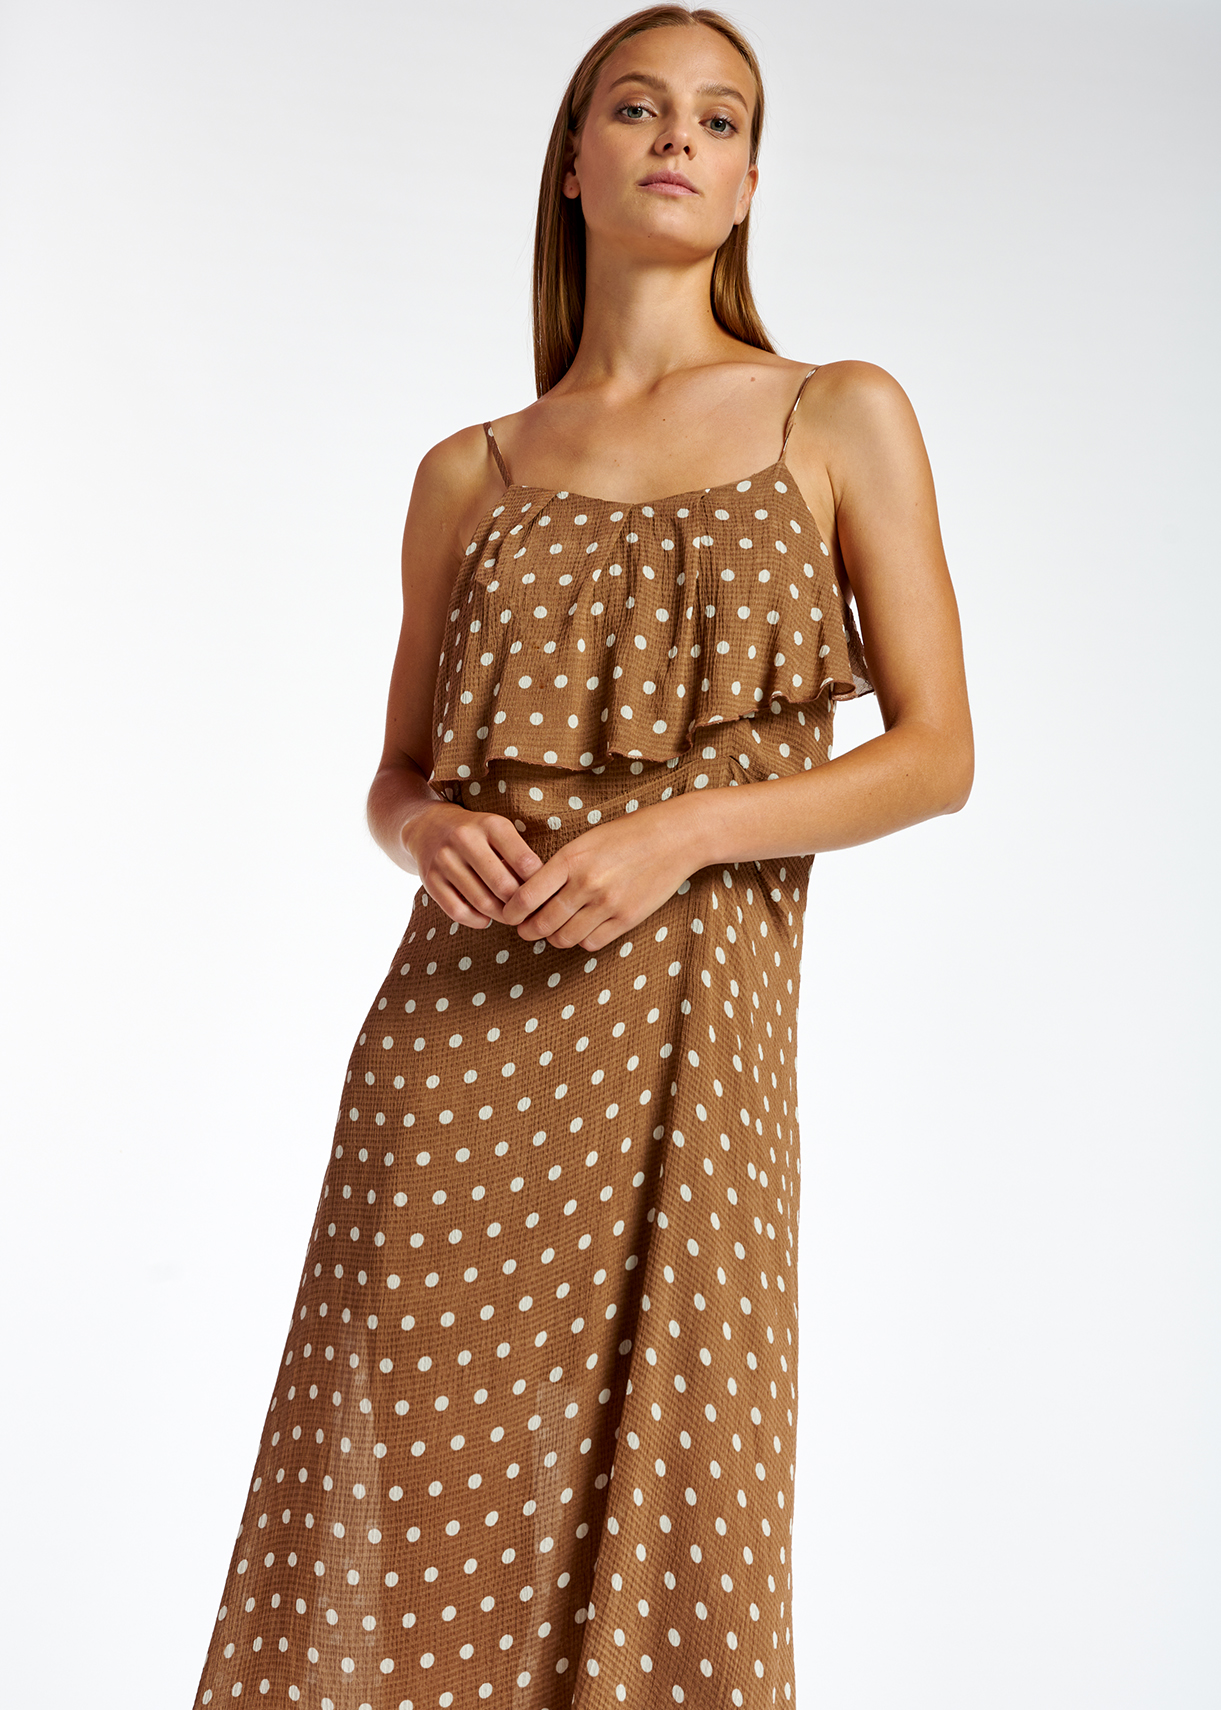 Brown and white polka-dot slip dress ...